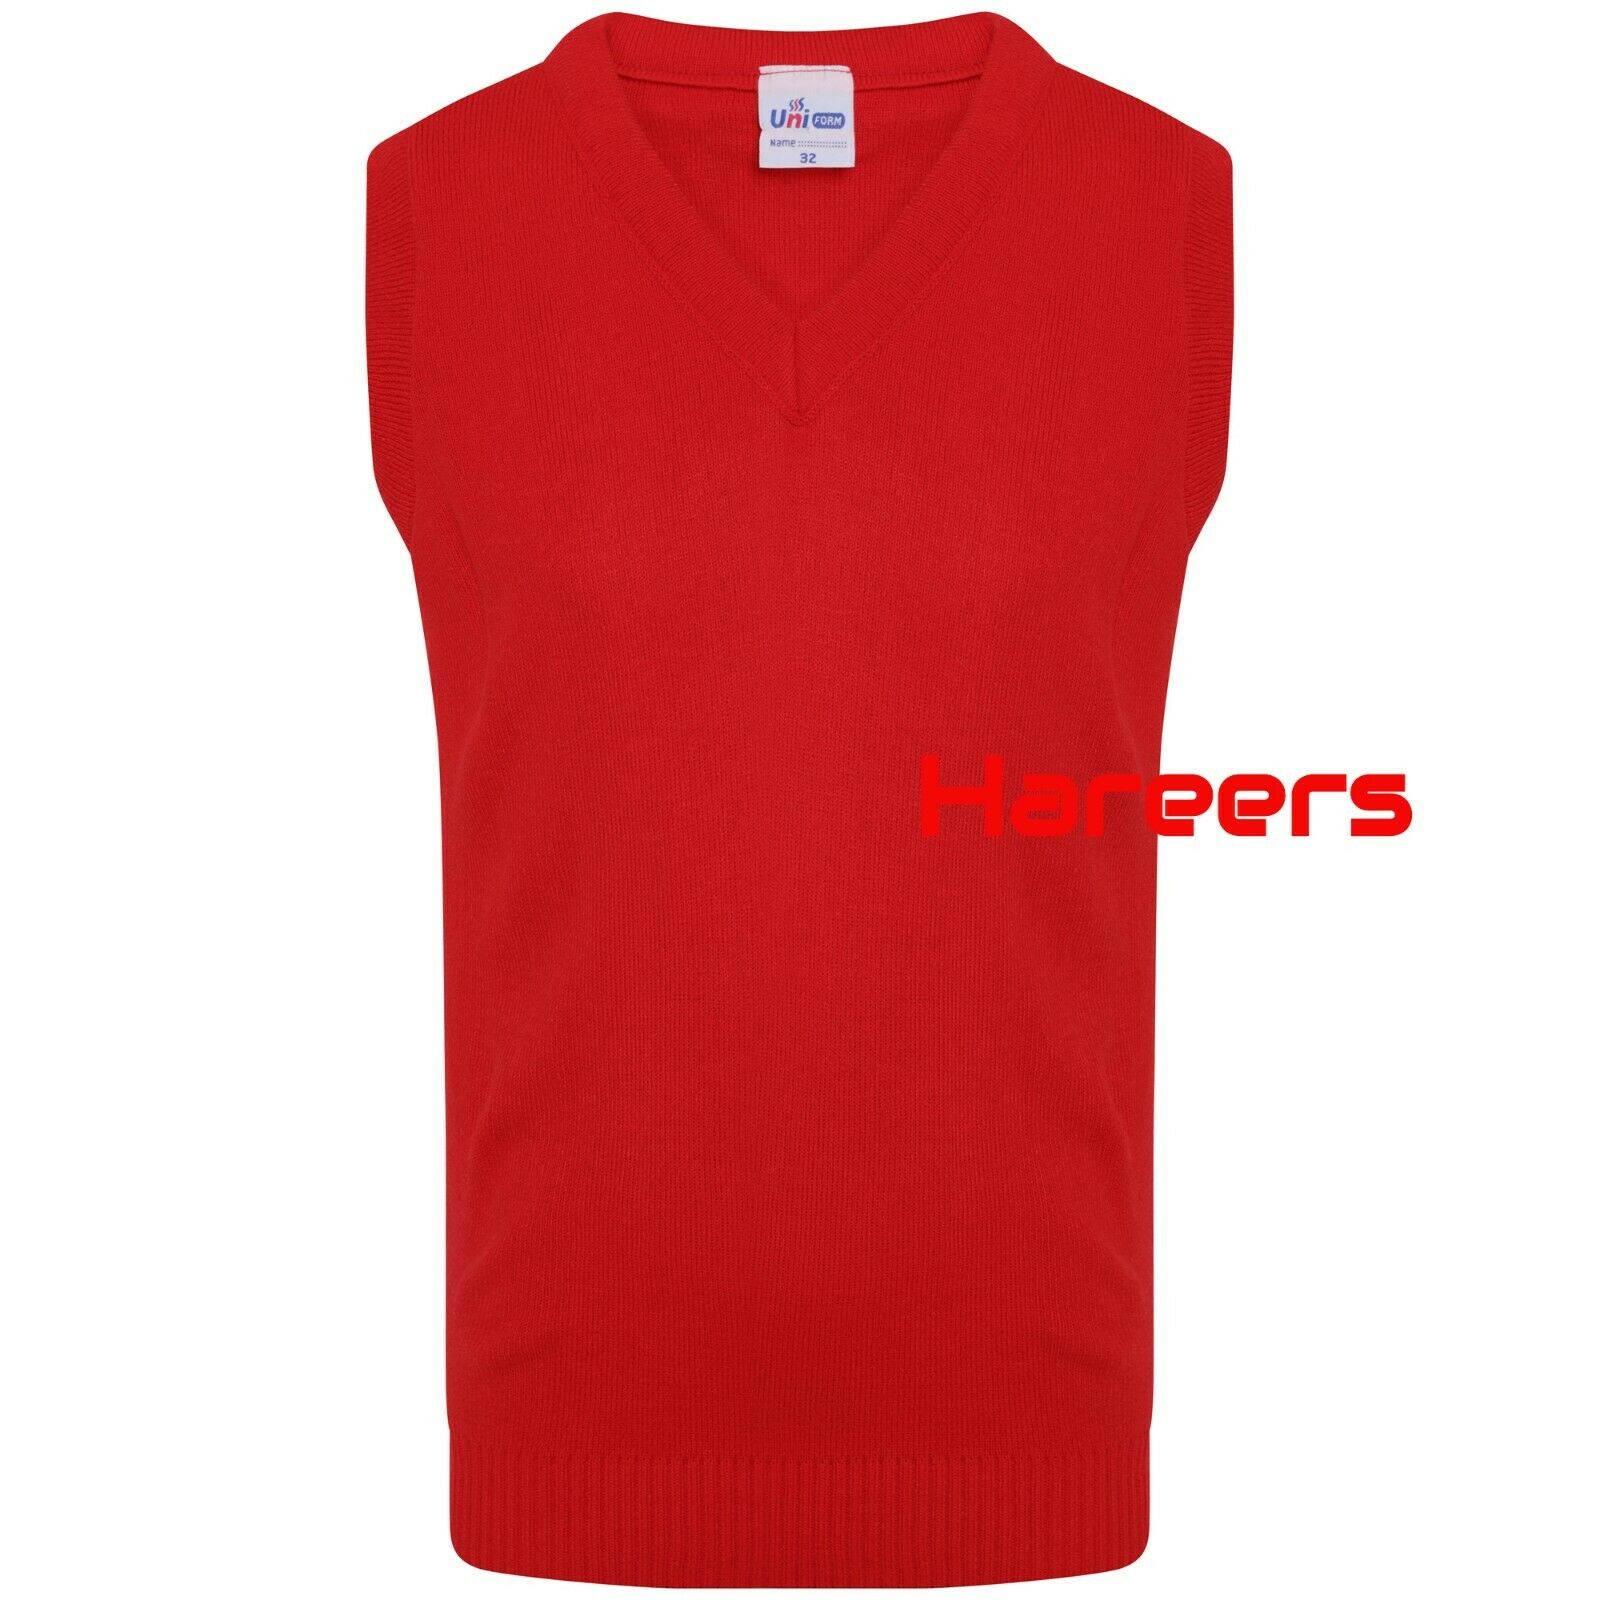 School Uniform Unisex Boys Girls Kids V Neck Knitted Sleeveless Tank Top Jumper -Red